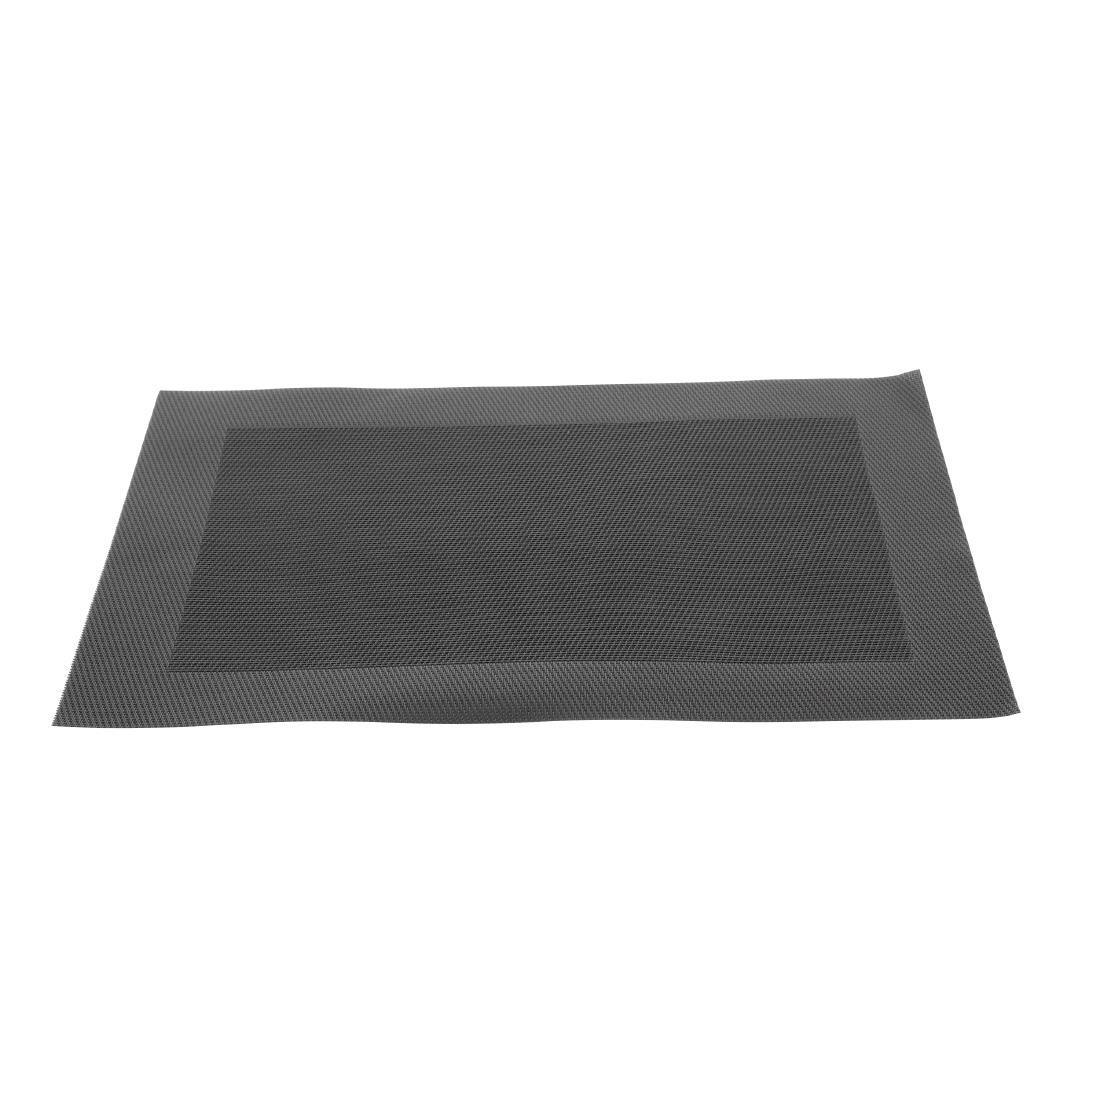 Woven PVC Black Table Mat (Pack of 4) - GG042  - 2